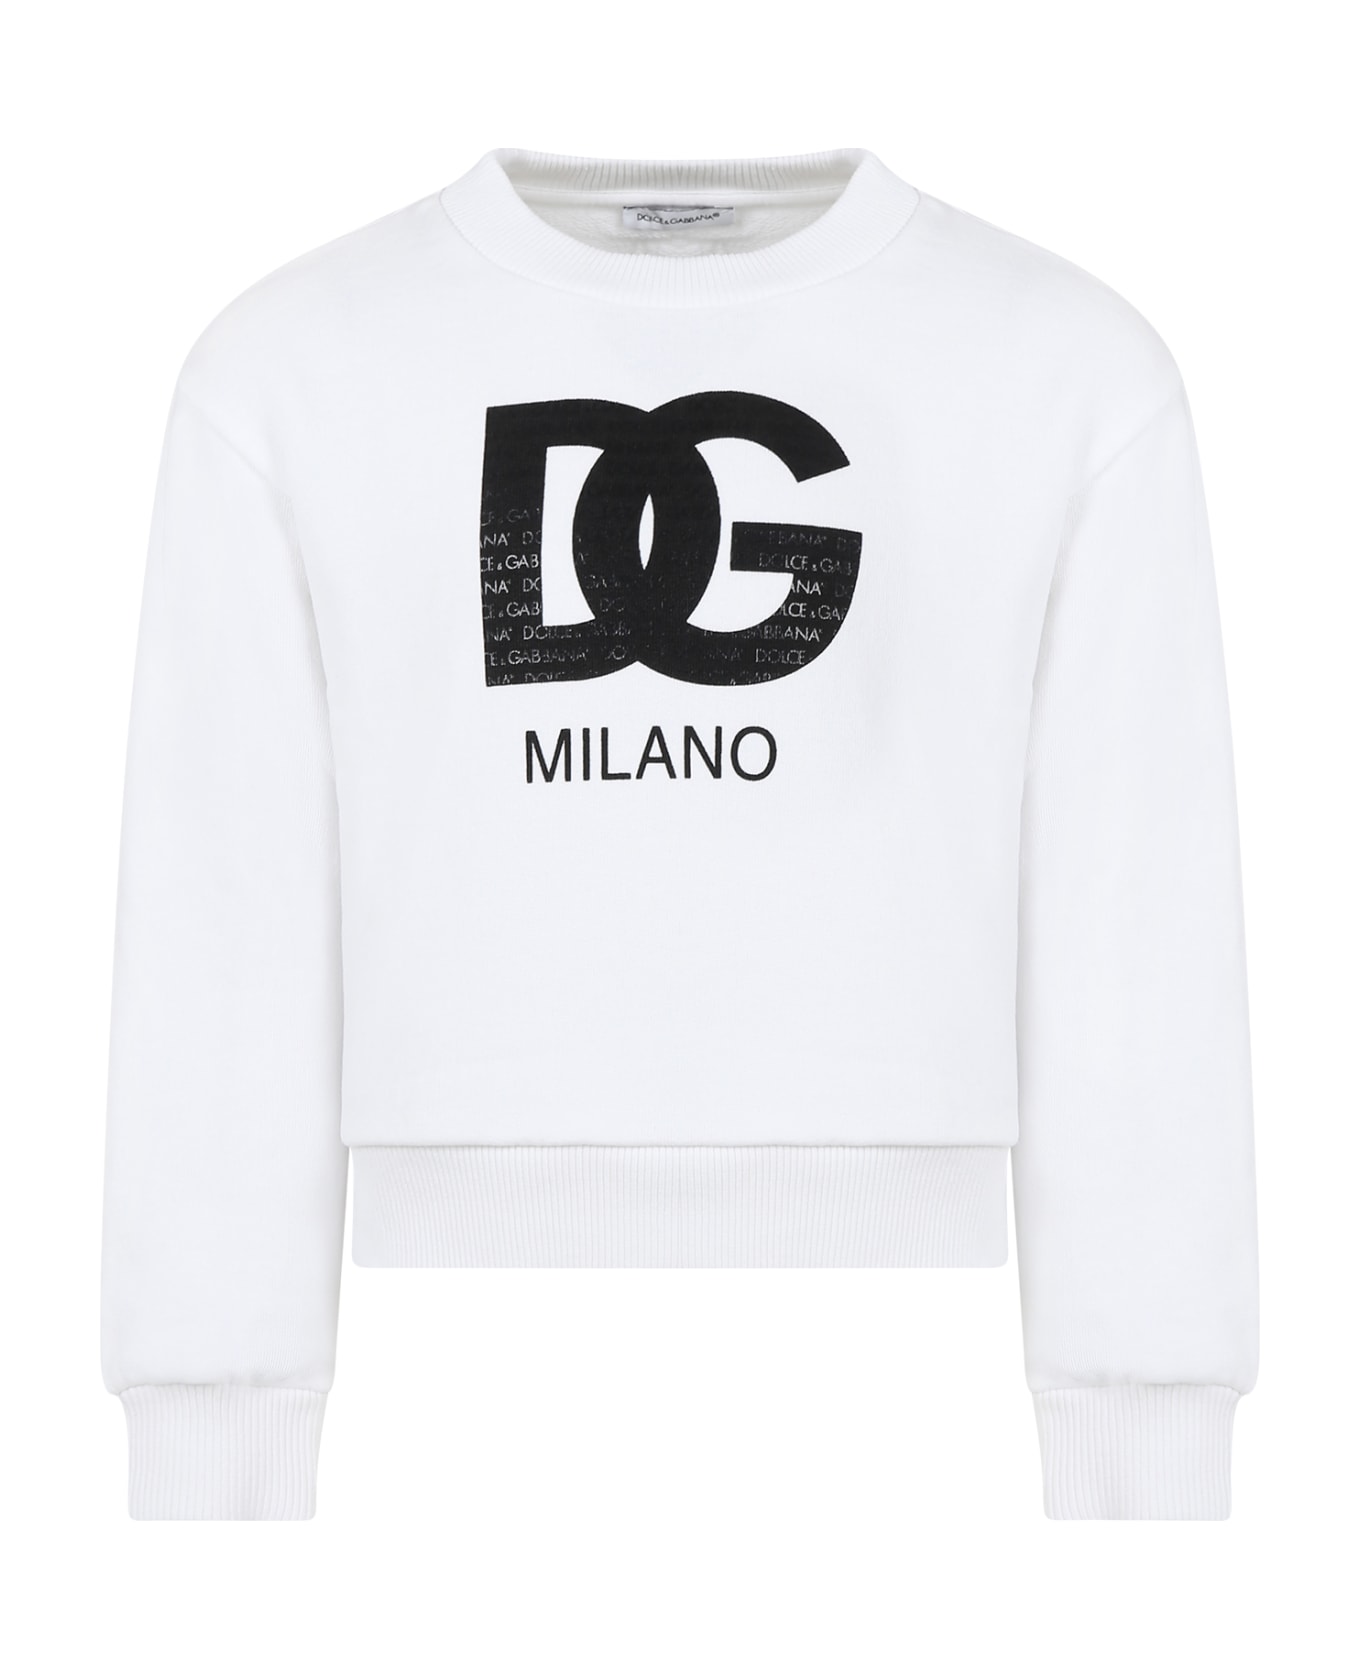 Dolce & Gabbana Whit Sweatshirt For Kids With Iconic Monogram - Bianco